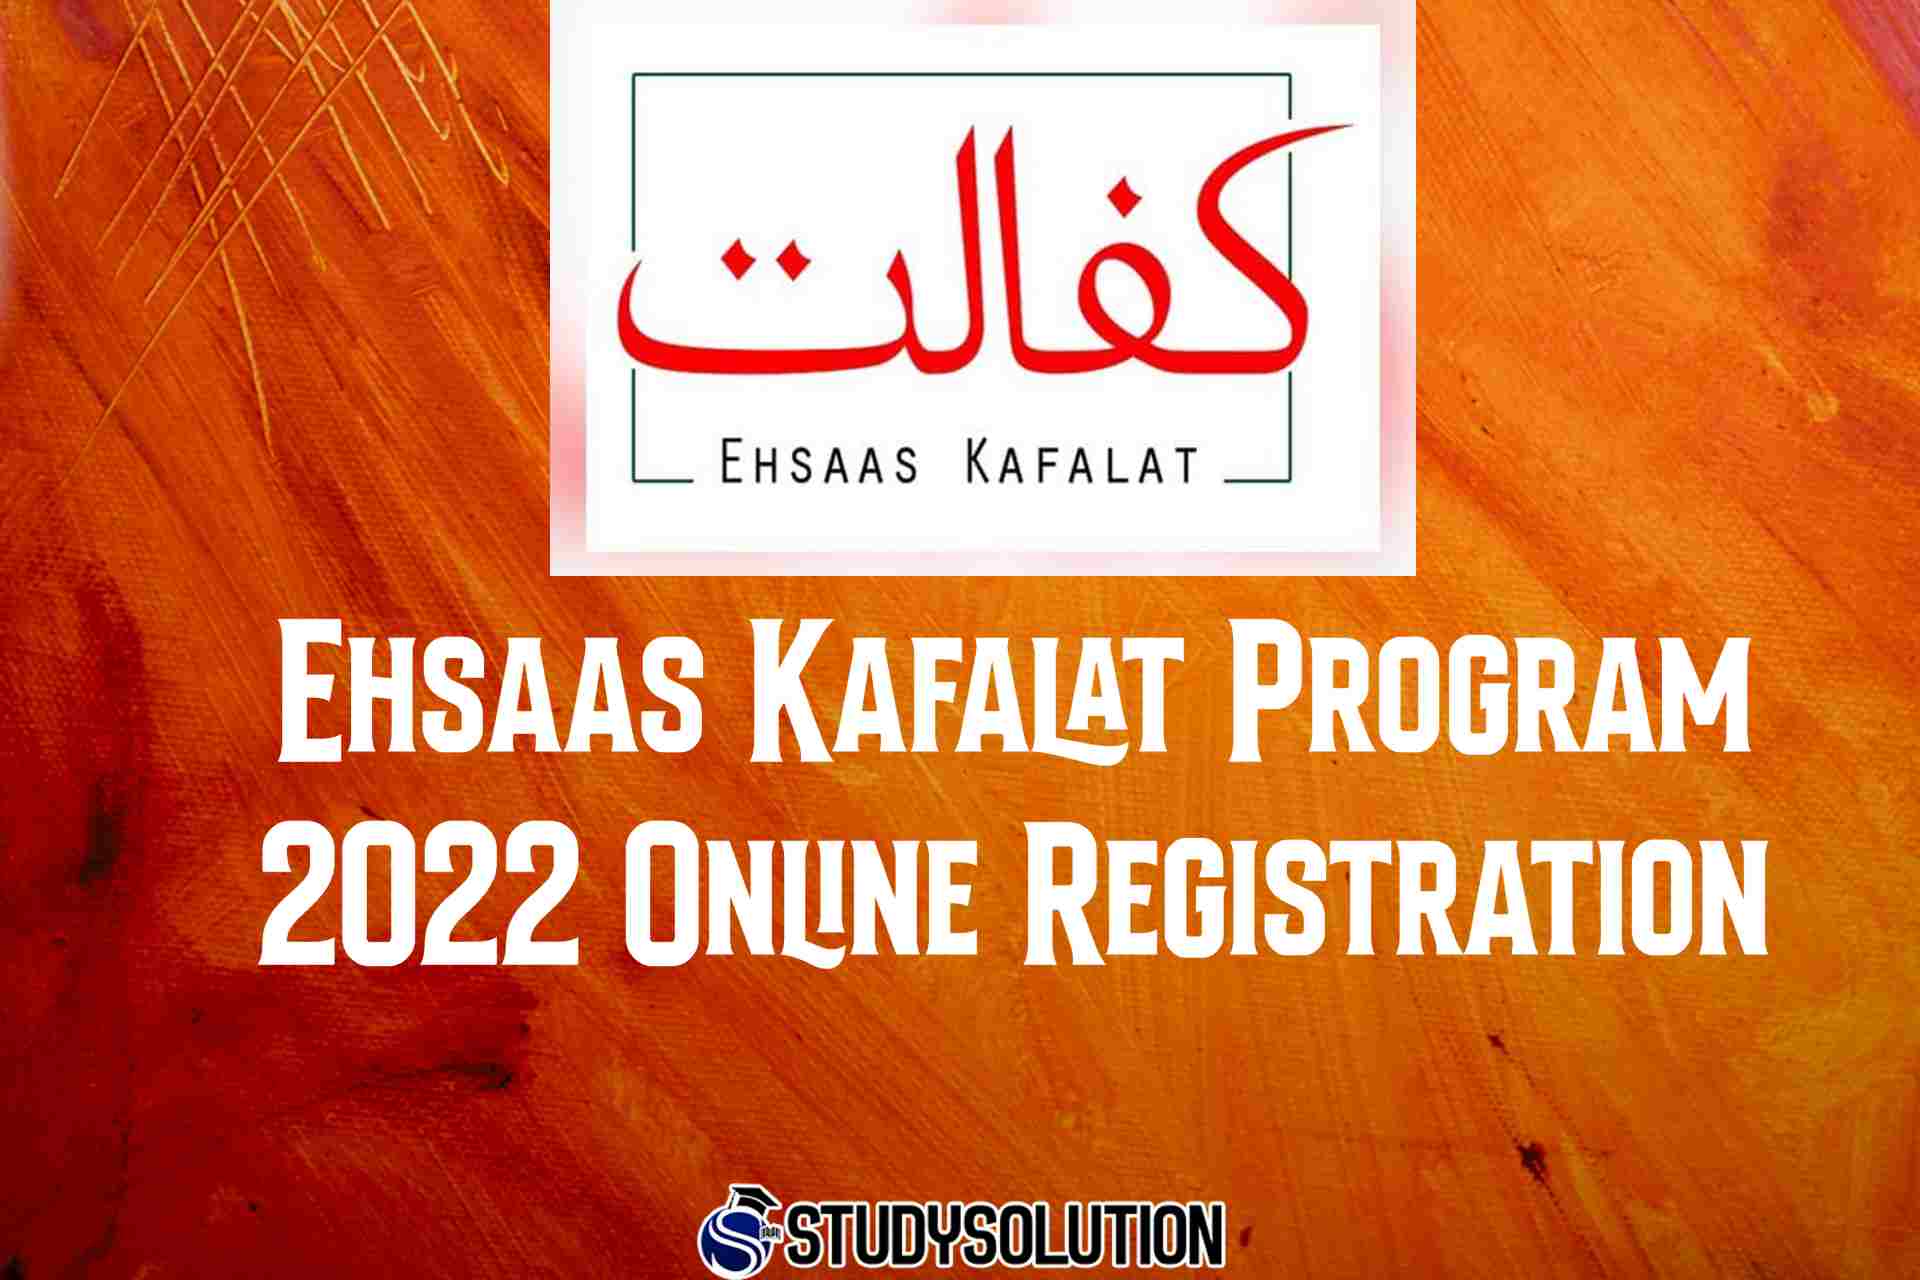 Ehsaas Kafalat Program